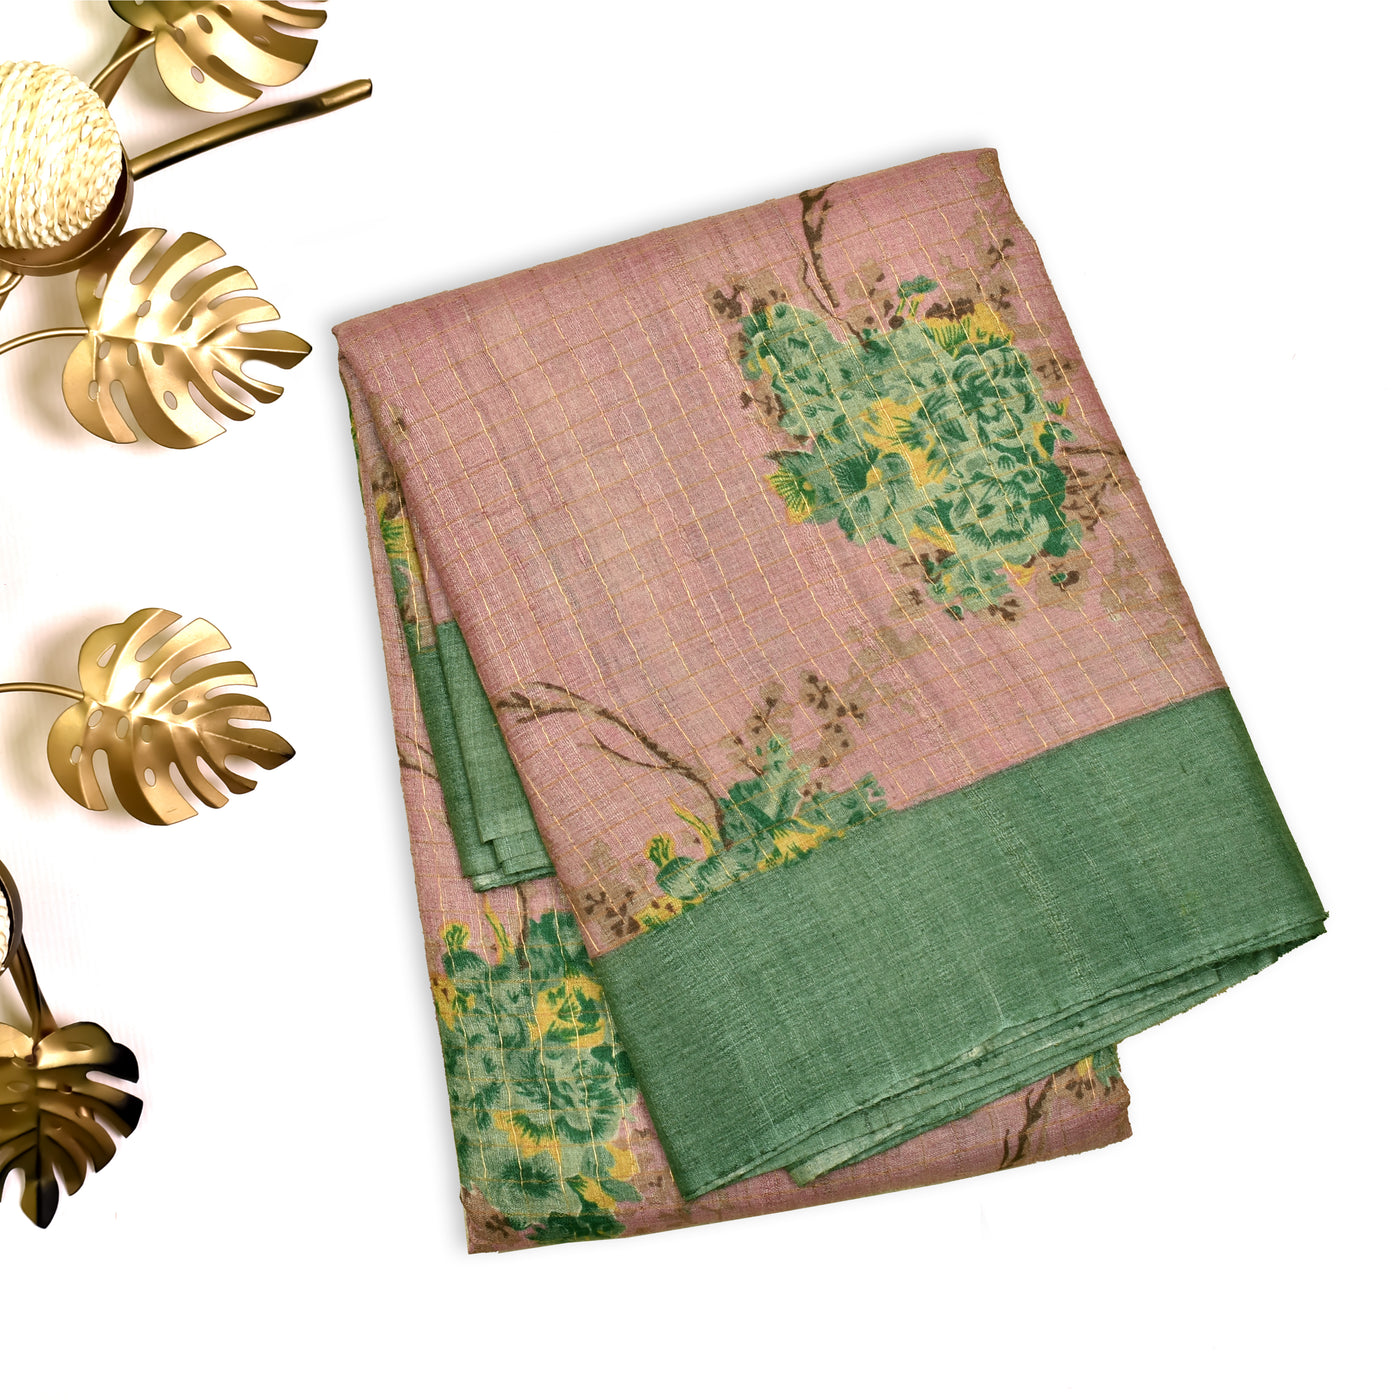 Onion Pink Tussar Silk Saree with Floral Print and Zari Checks Design